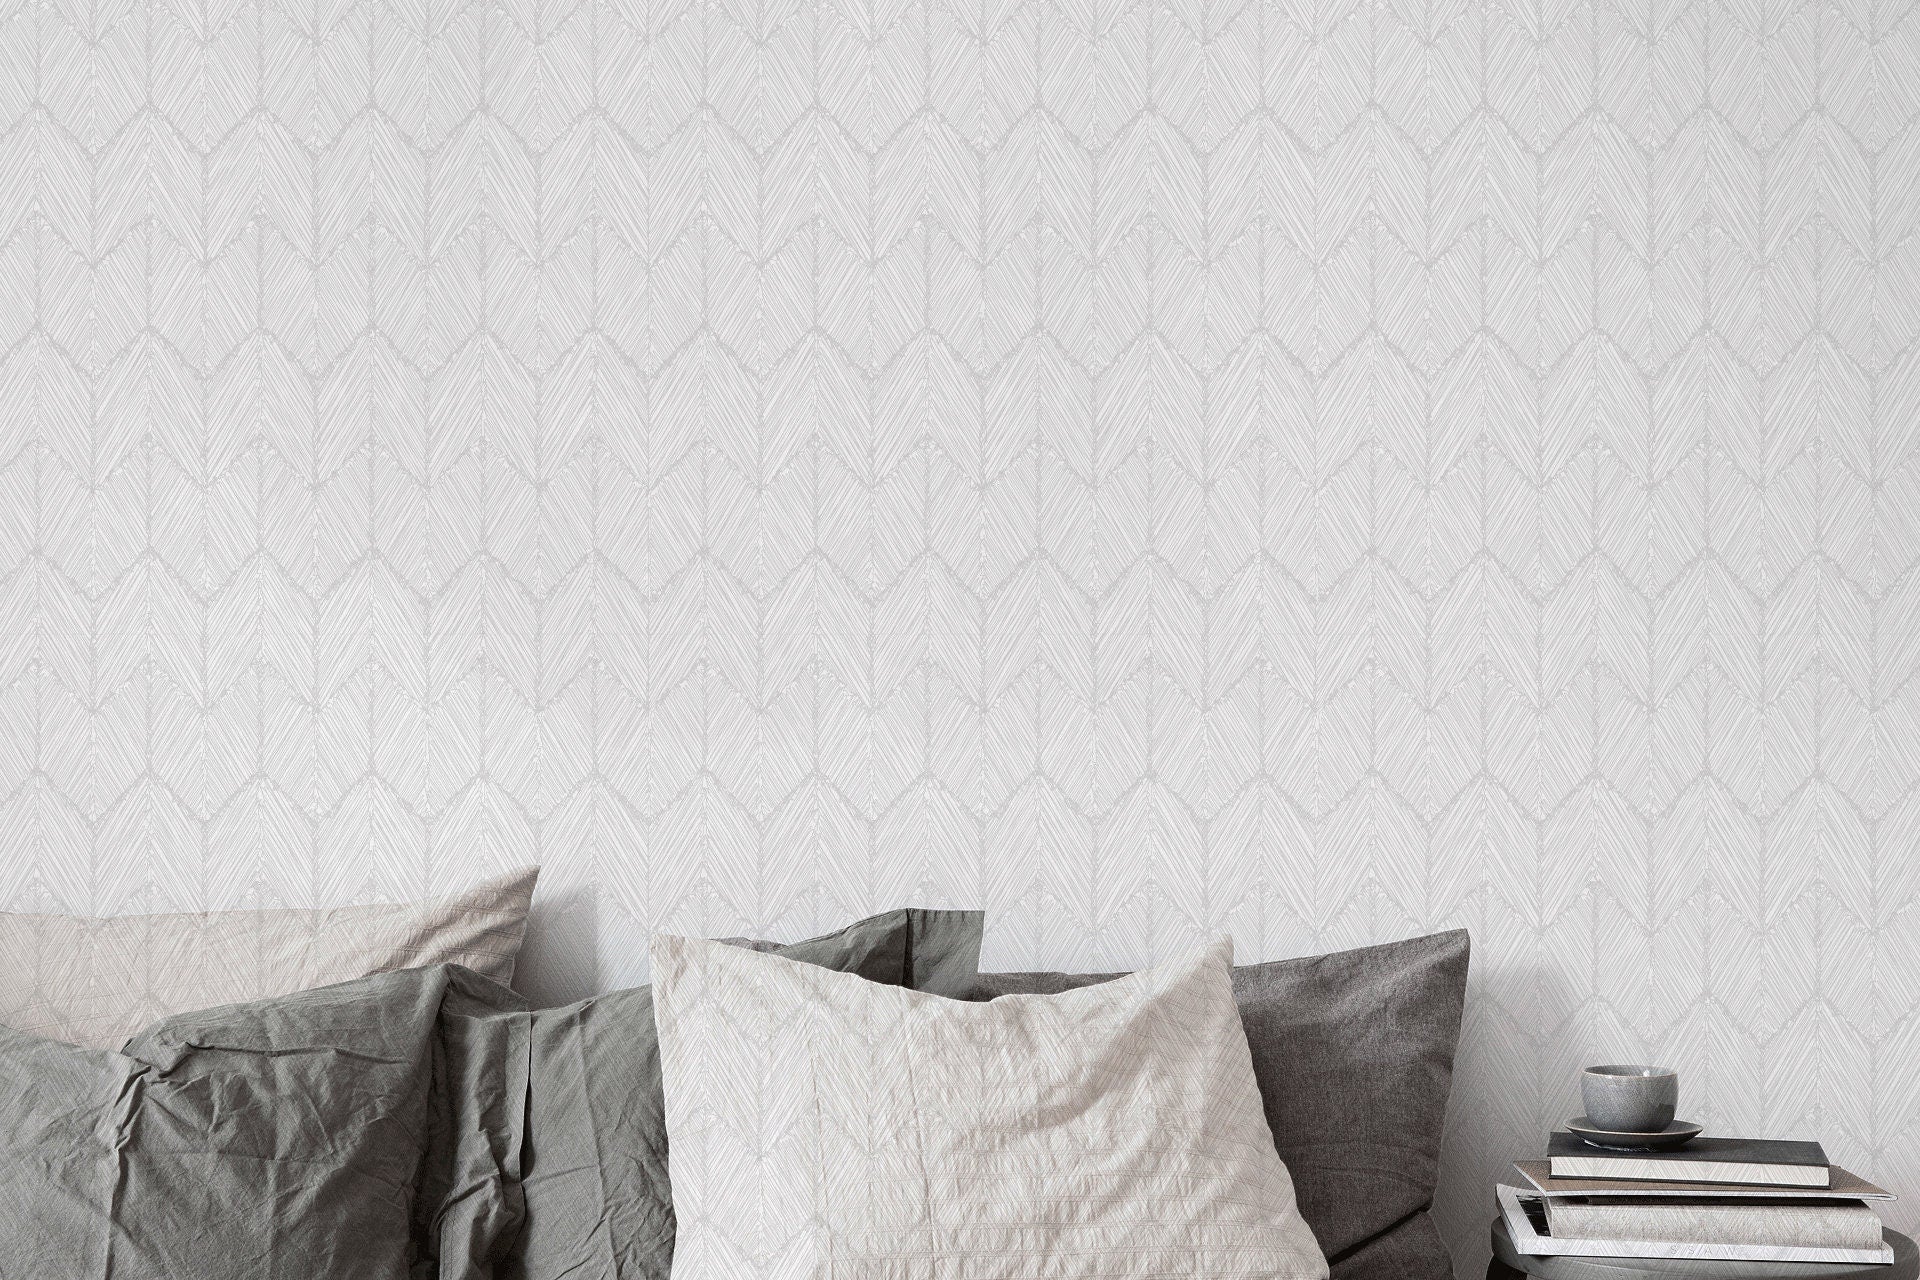 Removable Wallpaper, Scandinavian Wallpaper, Temporary Wallpaper, Minimalistic Wallpaper, Peel and Stick Wallpaper, Wall Paper, Boho - B797